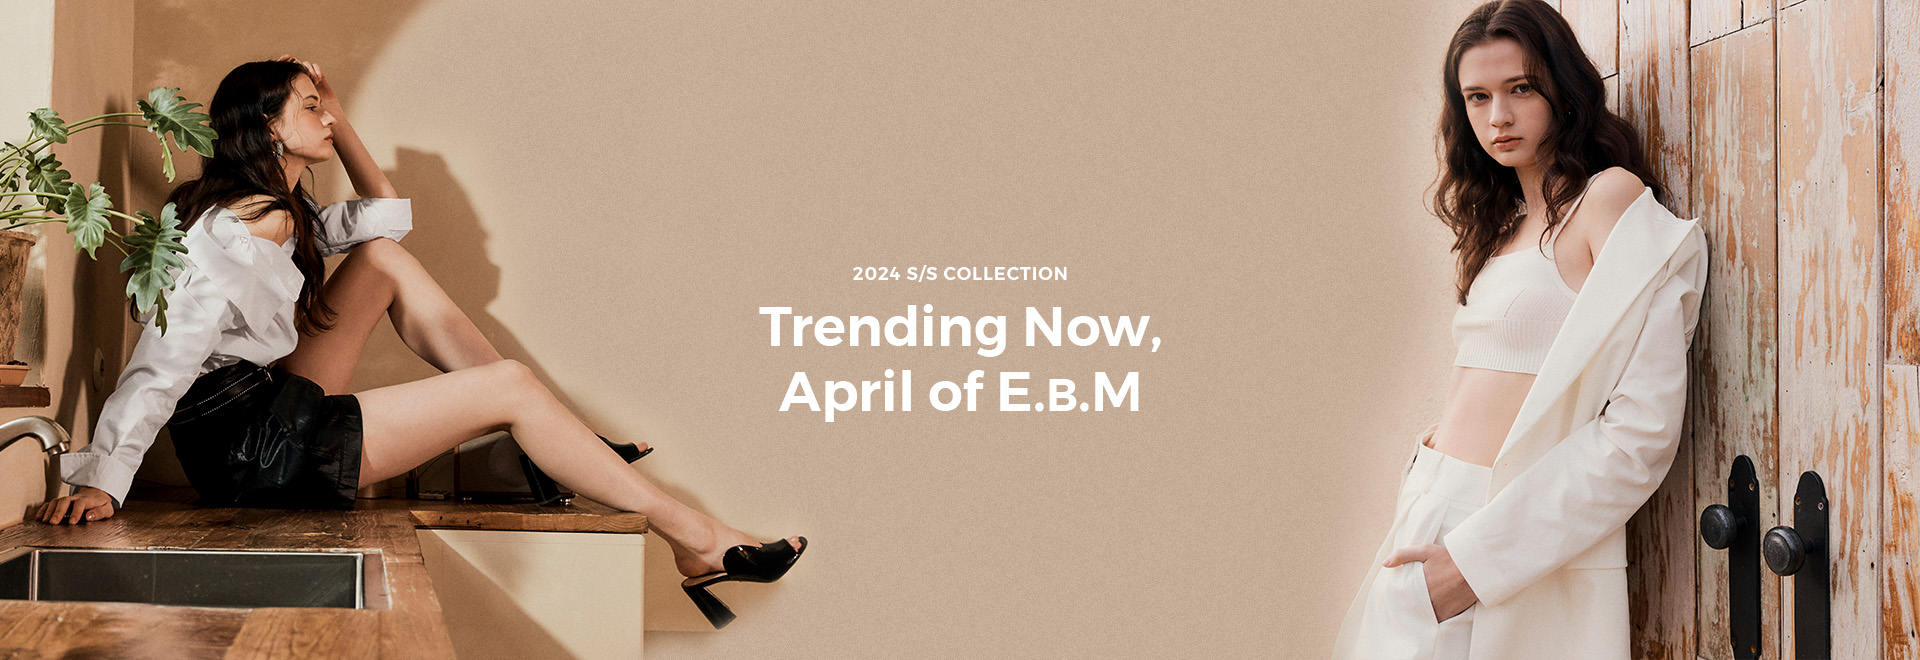 Trending Now, April of E.B.M